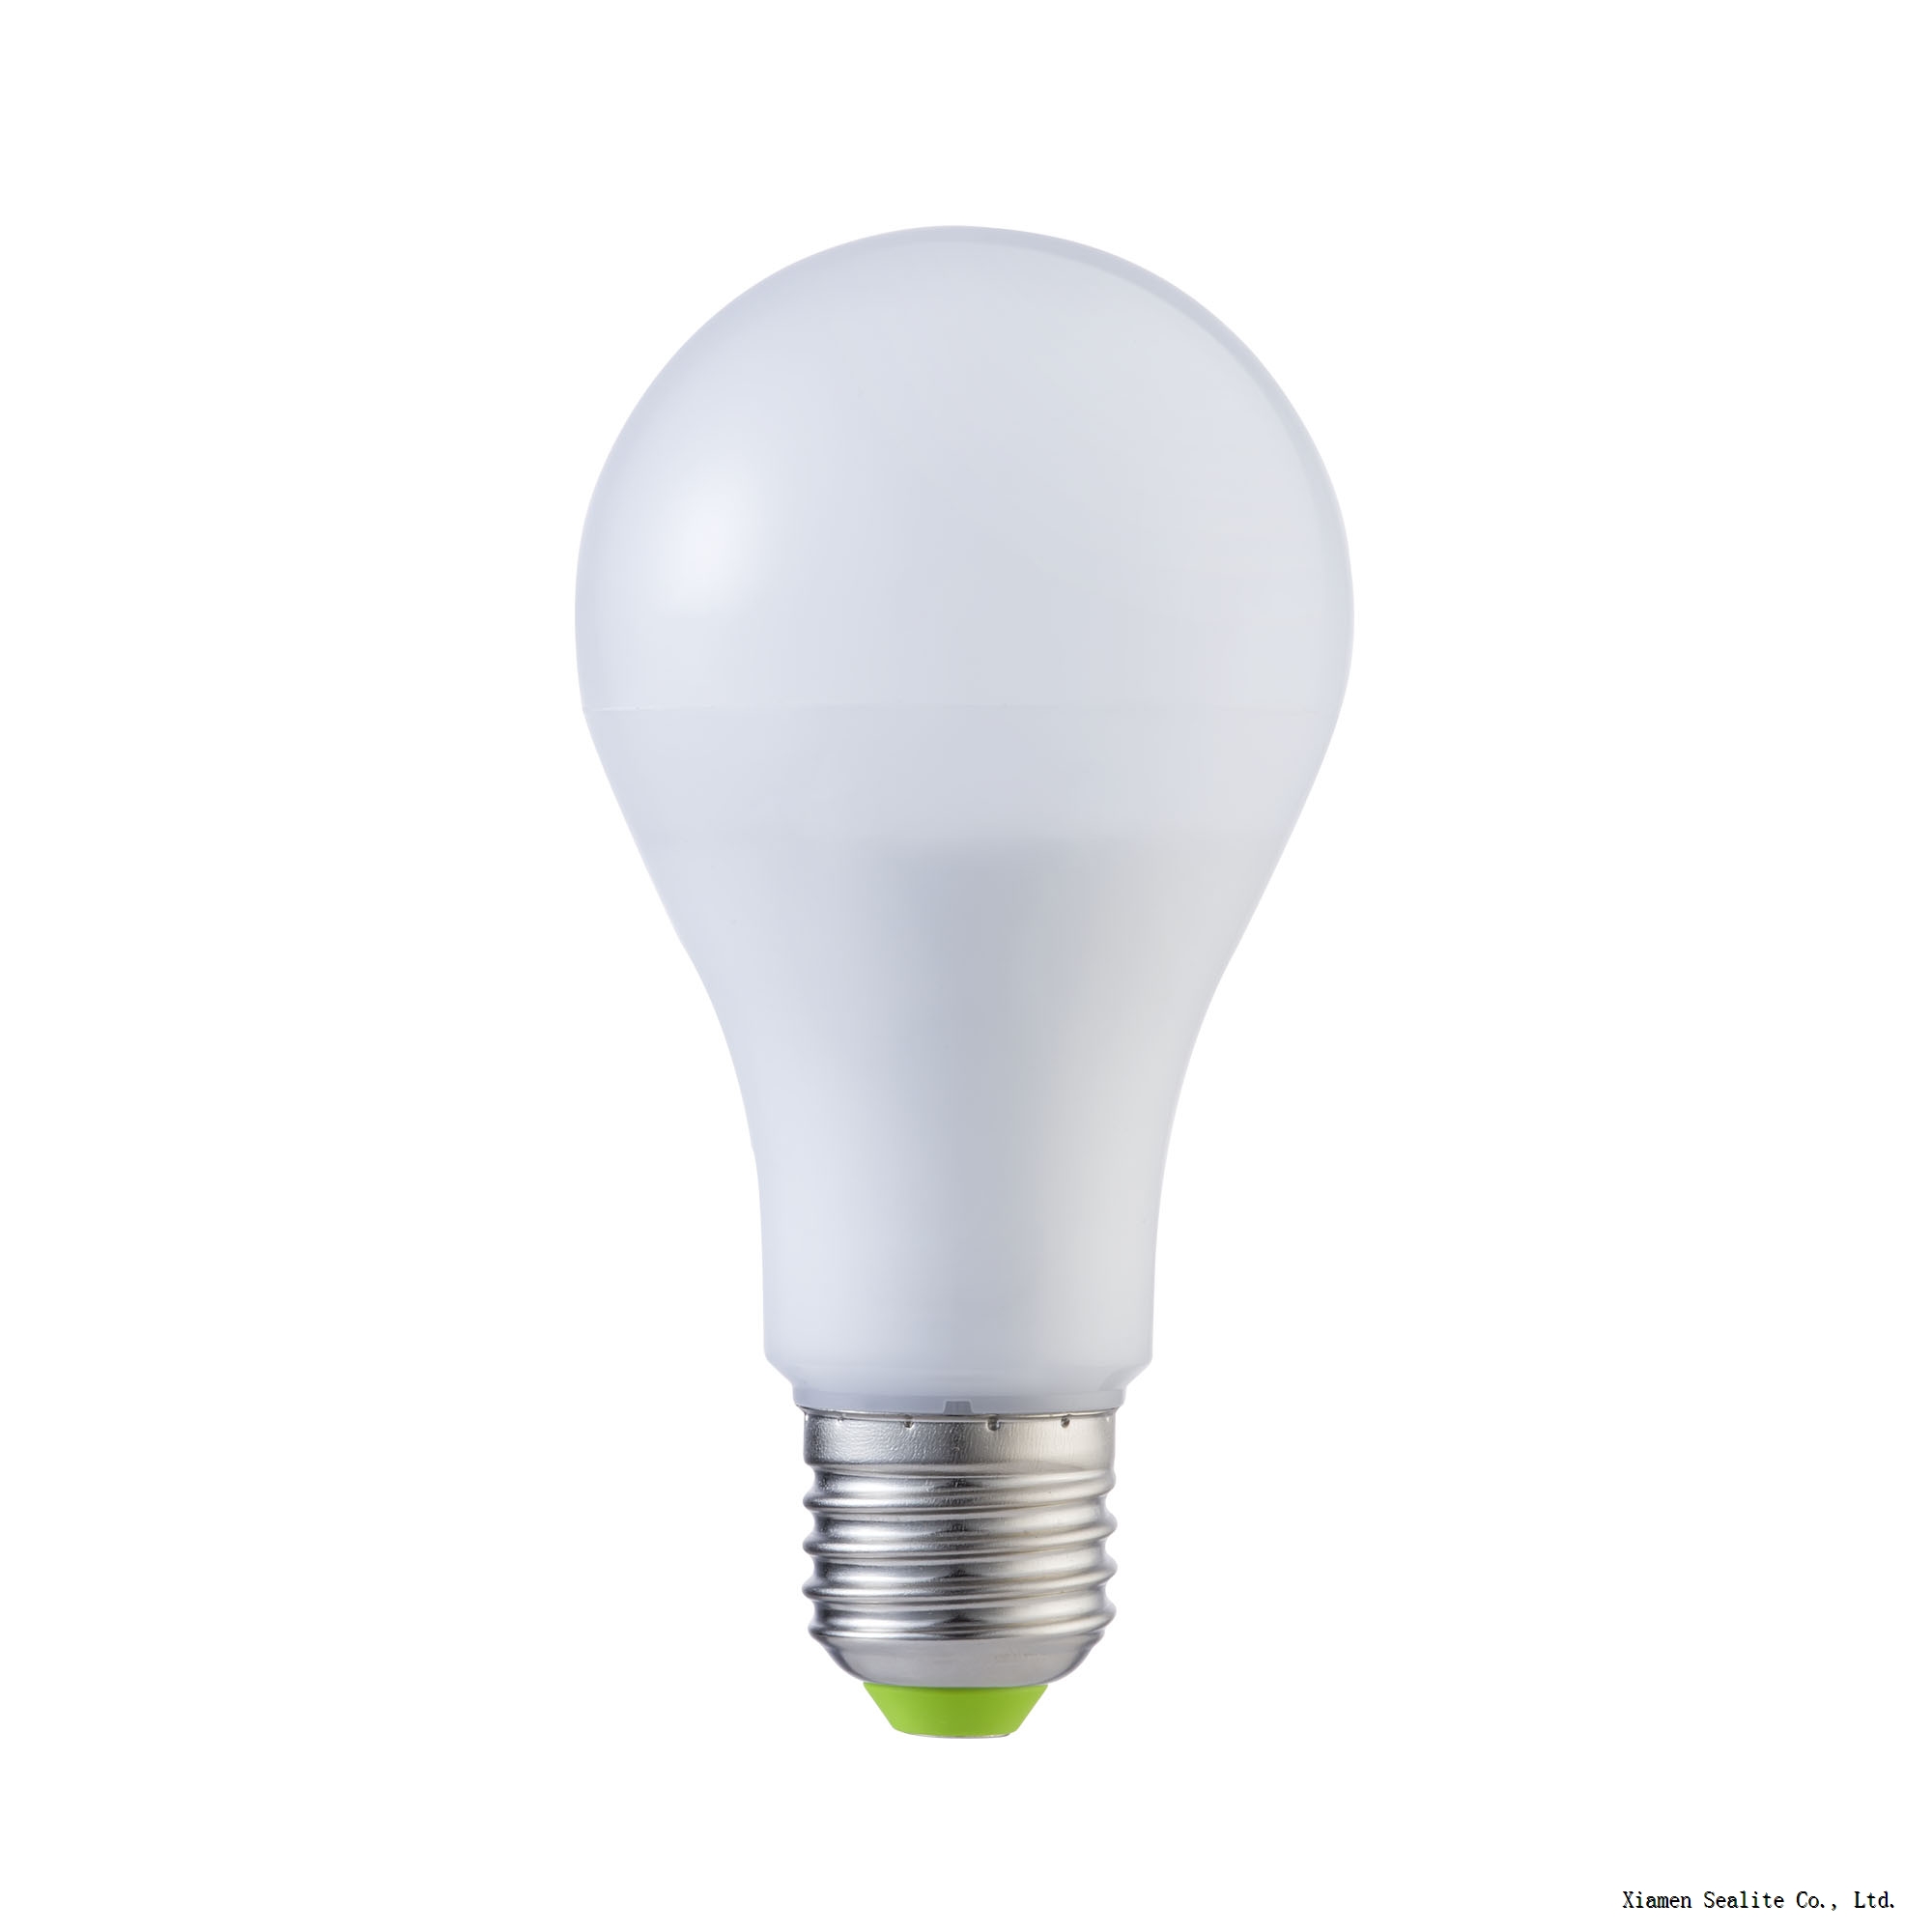 CE-EMC Certified LED Light Bulb 10W